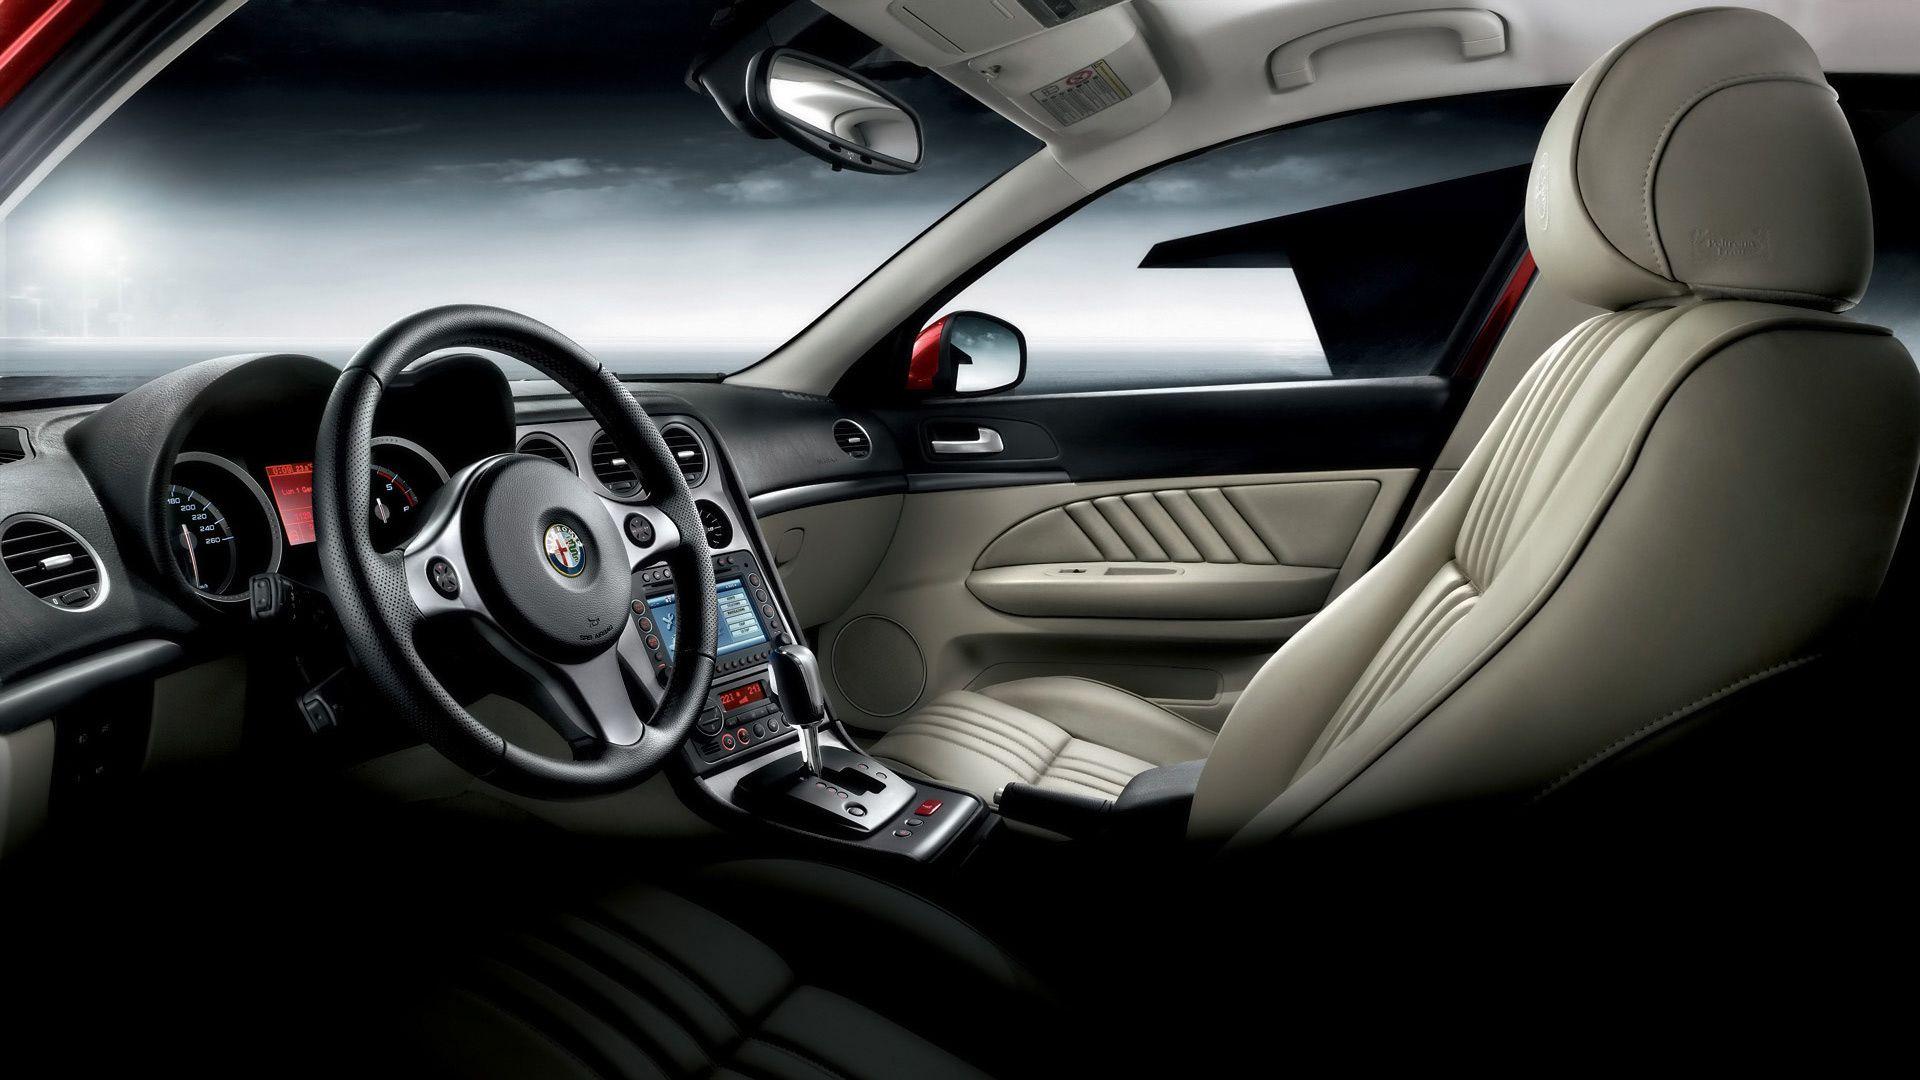 Widescreen Stunning Car Interiors K Ultra HD With Cars Interior 4k